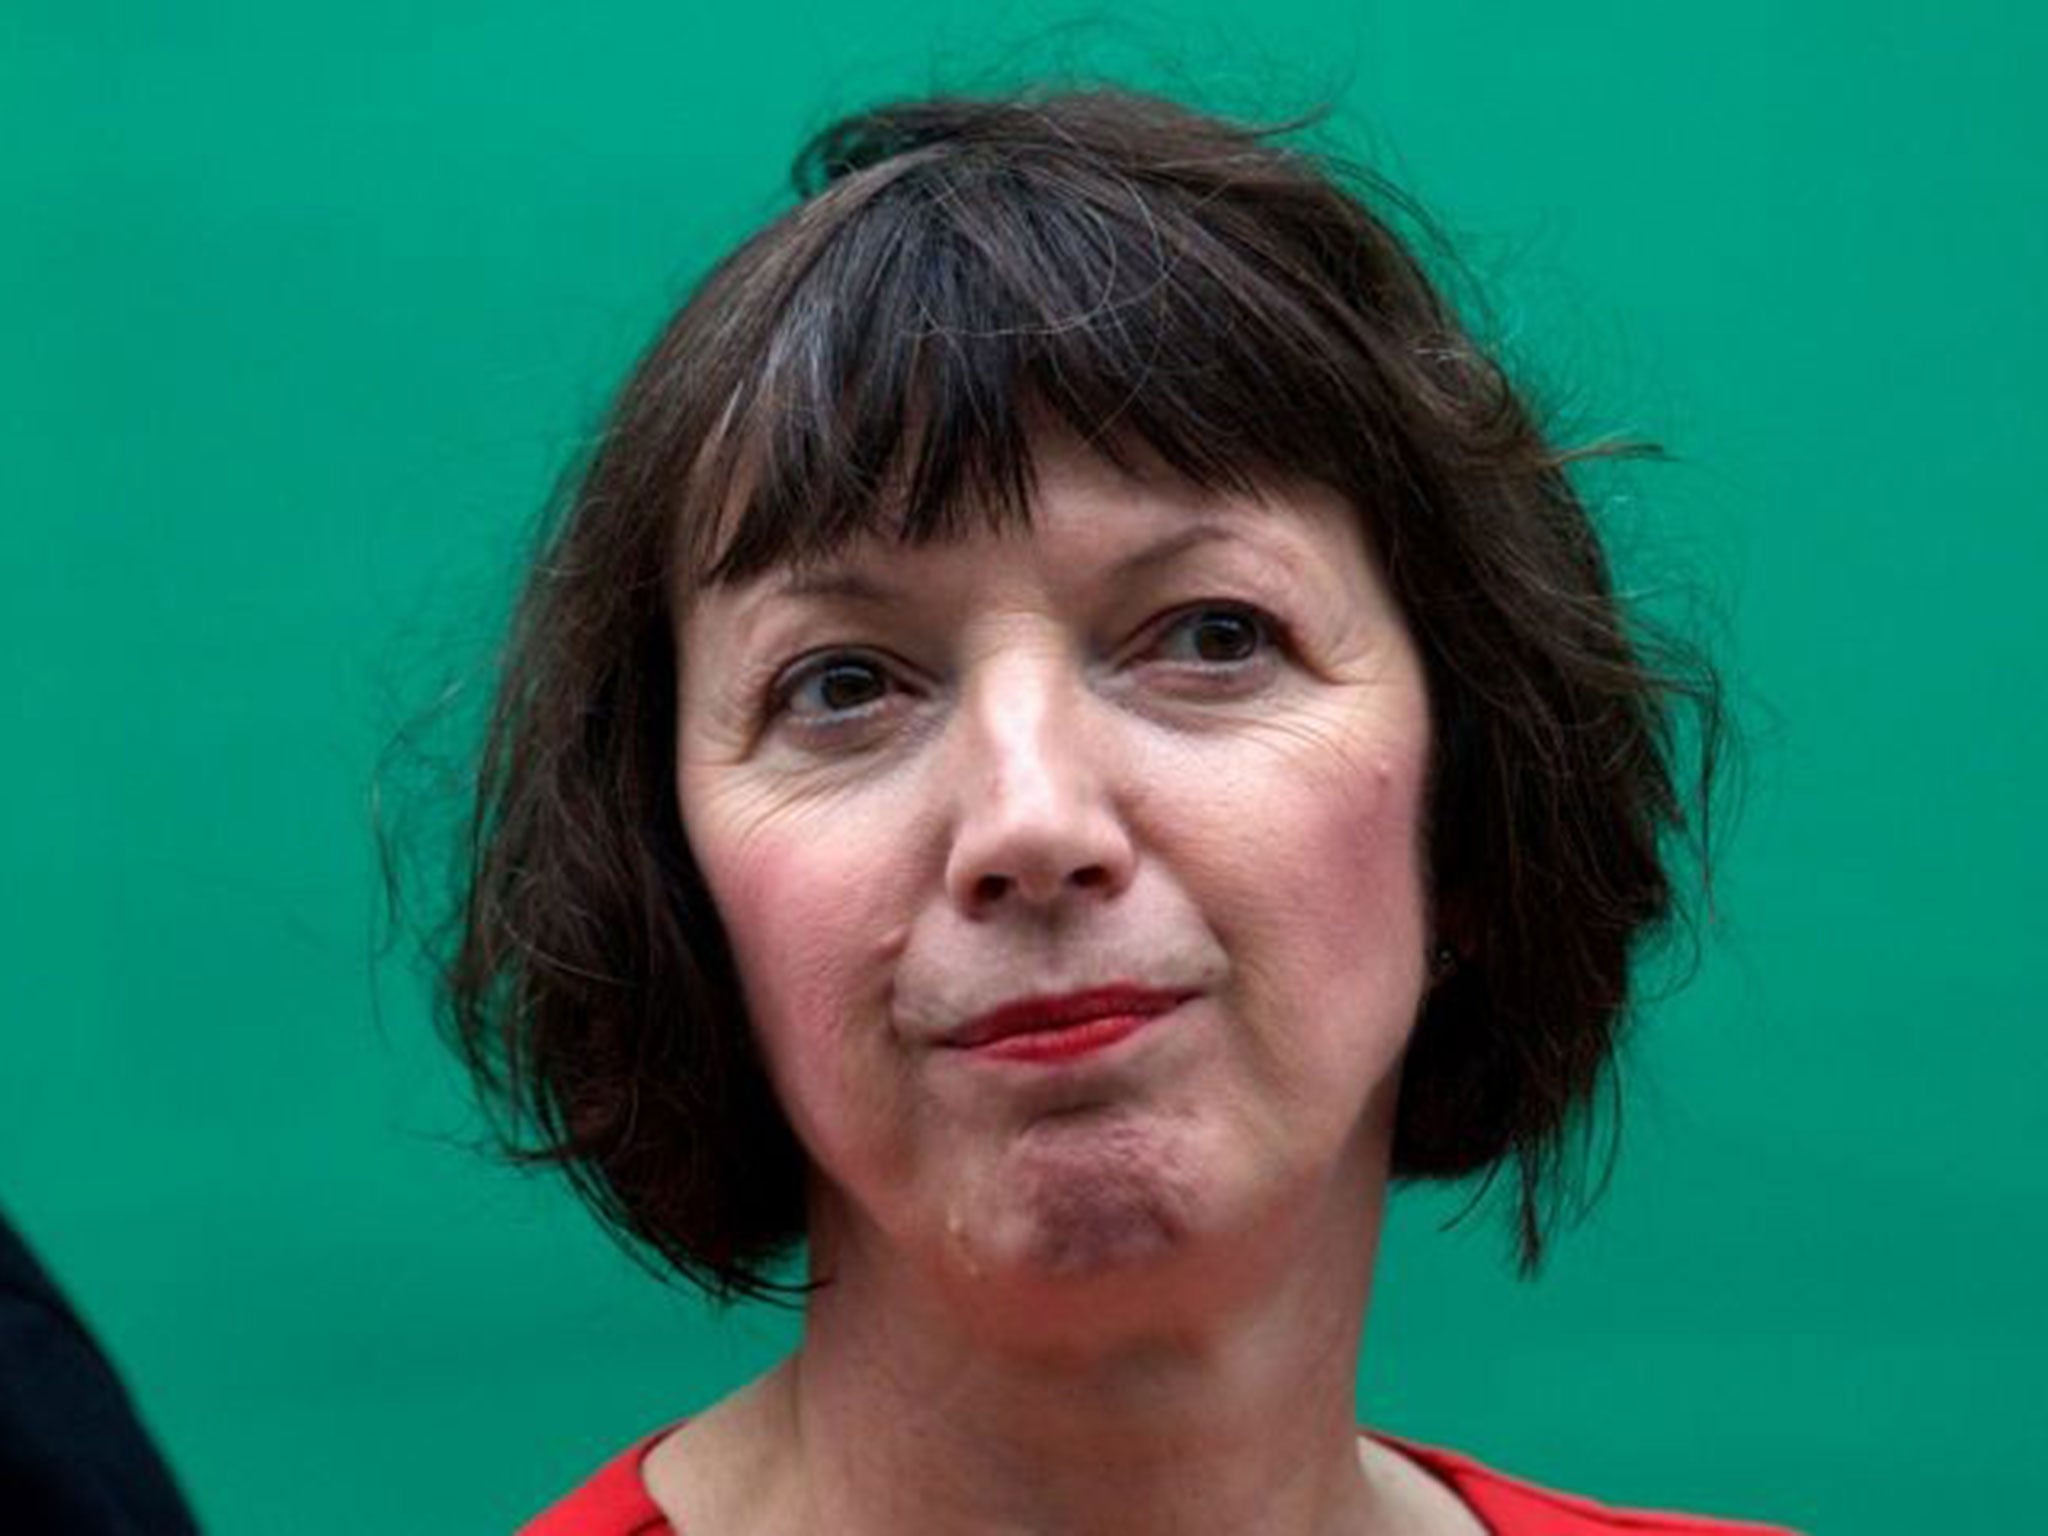 Frances O'Grady of the TUC criticised David Cameron for ignoring unions